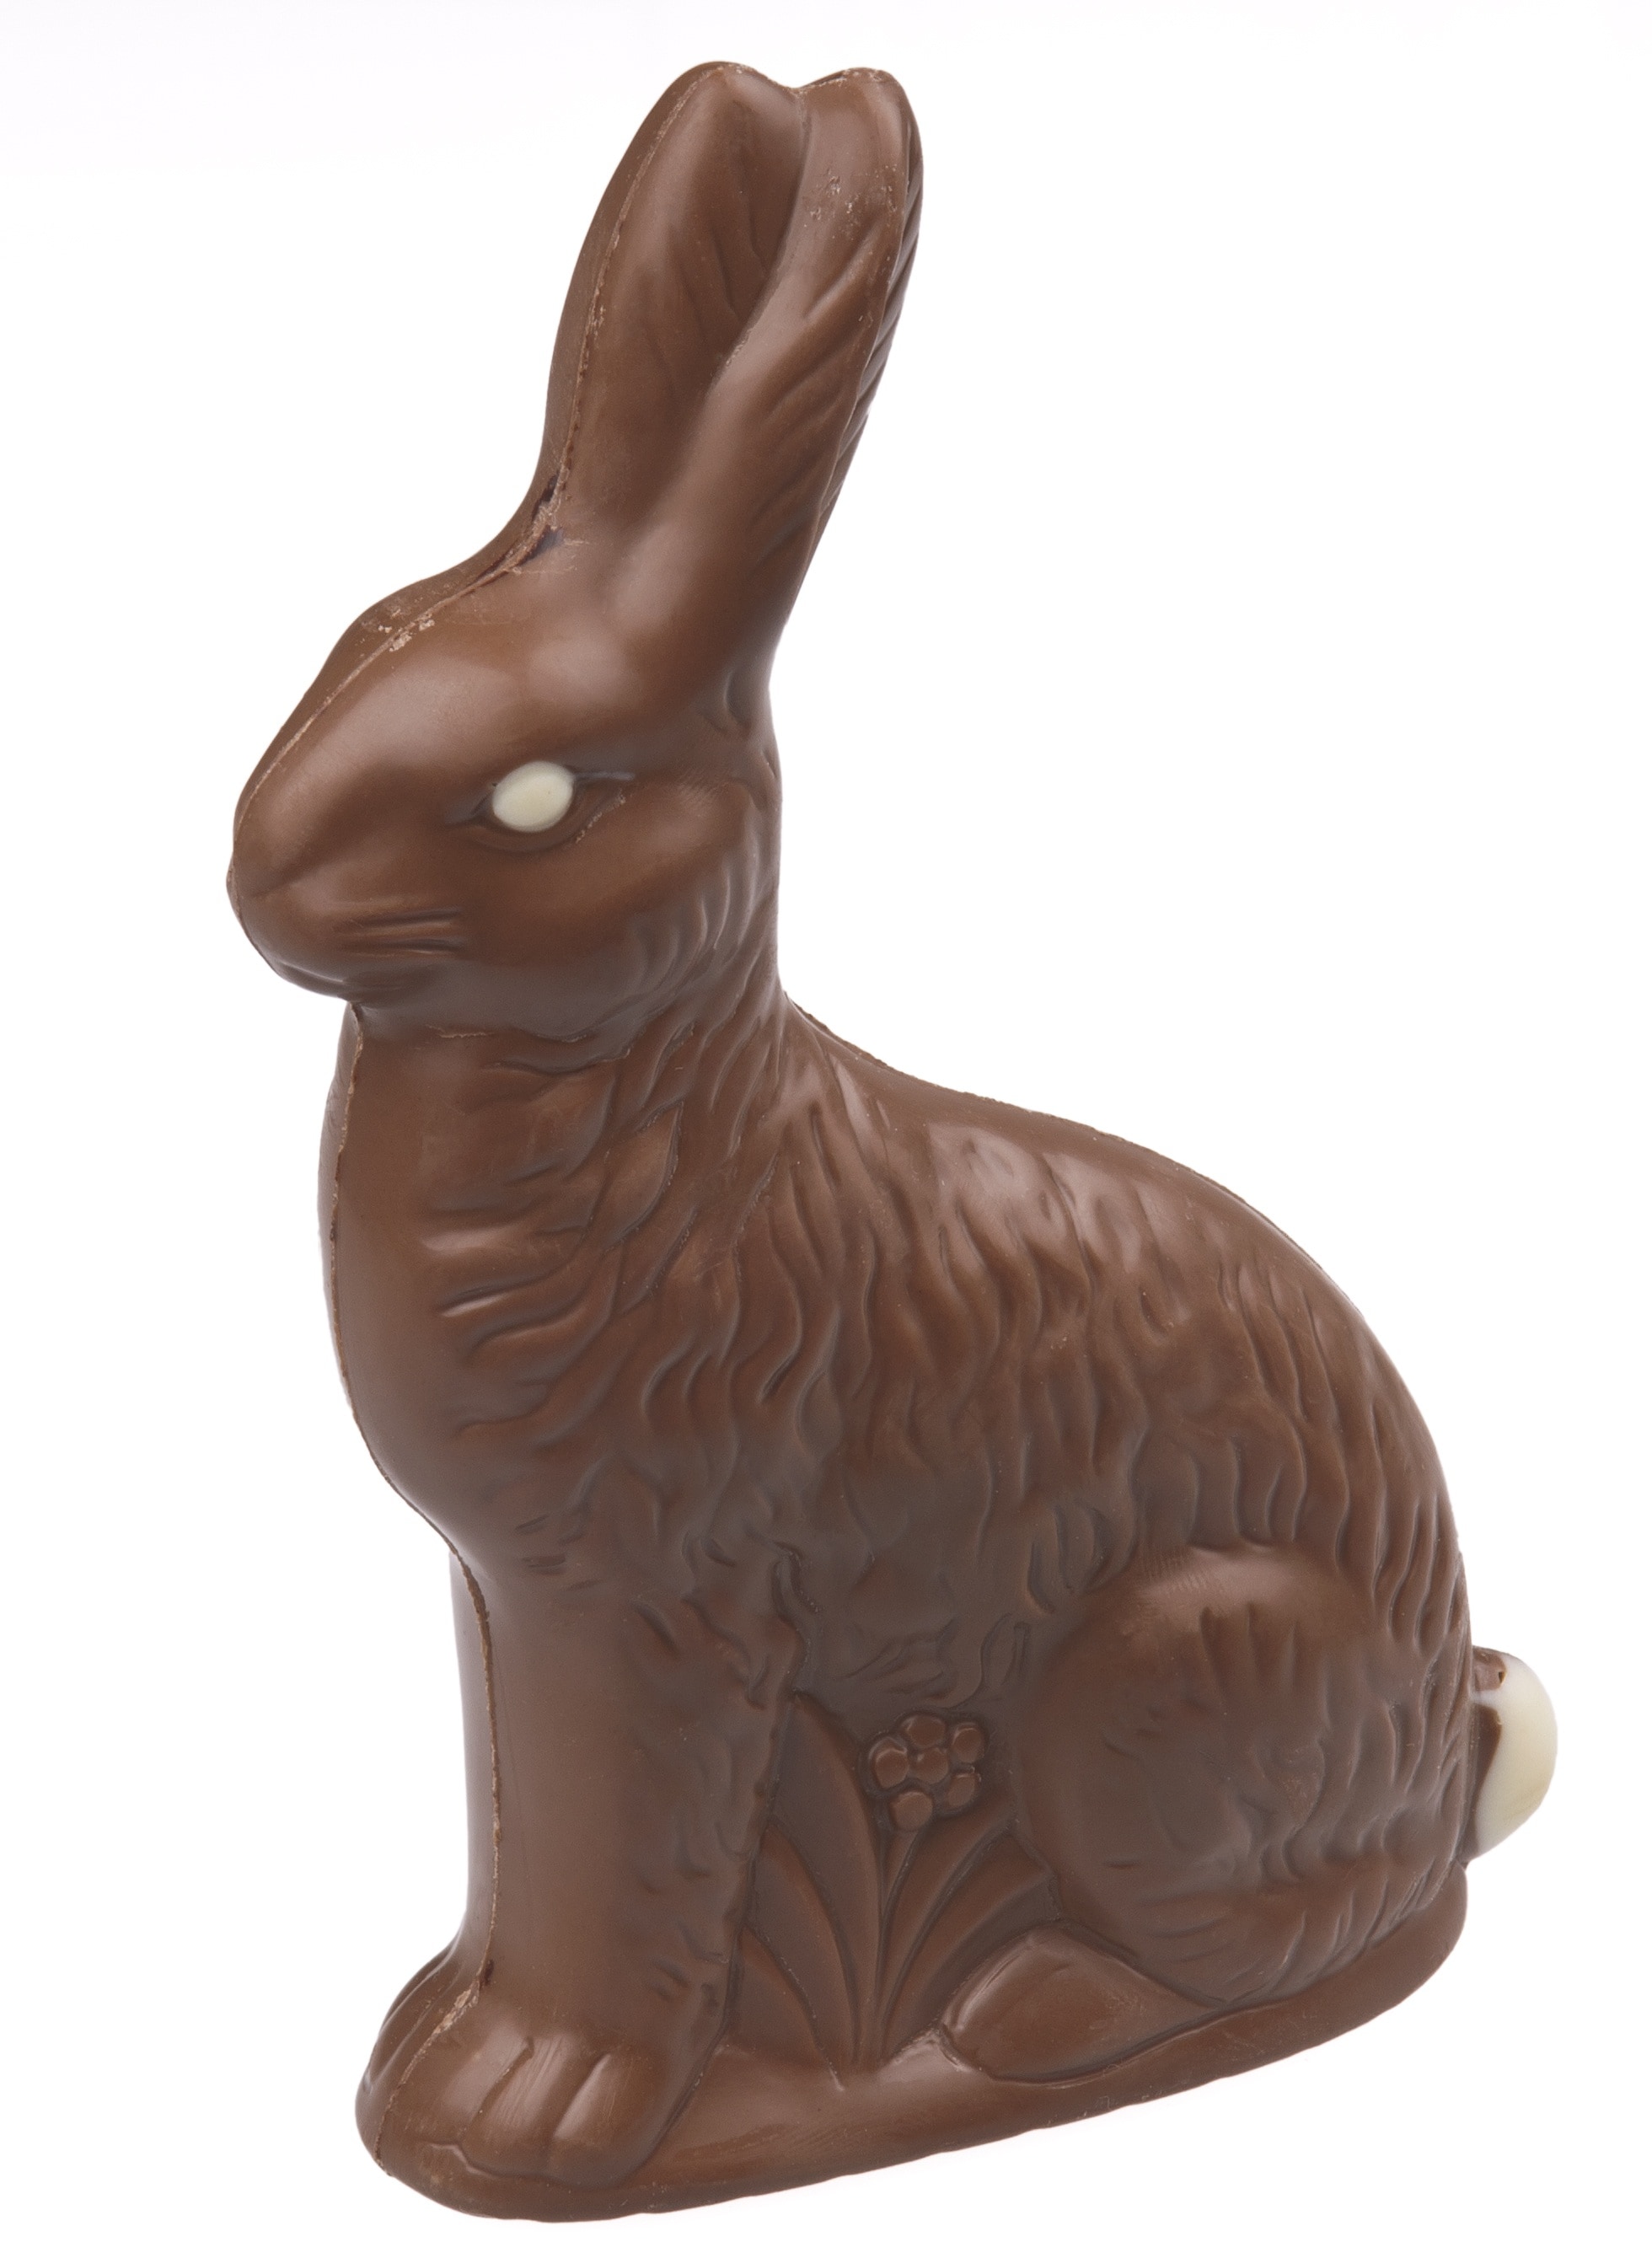 brown rabbit figurine